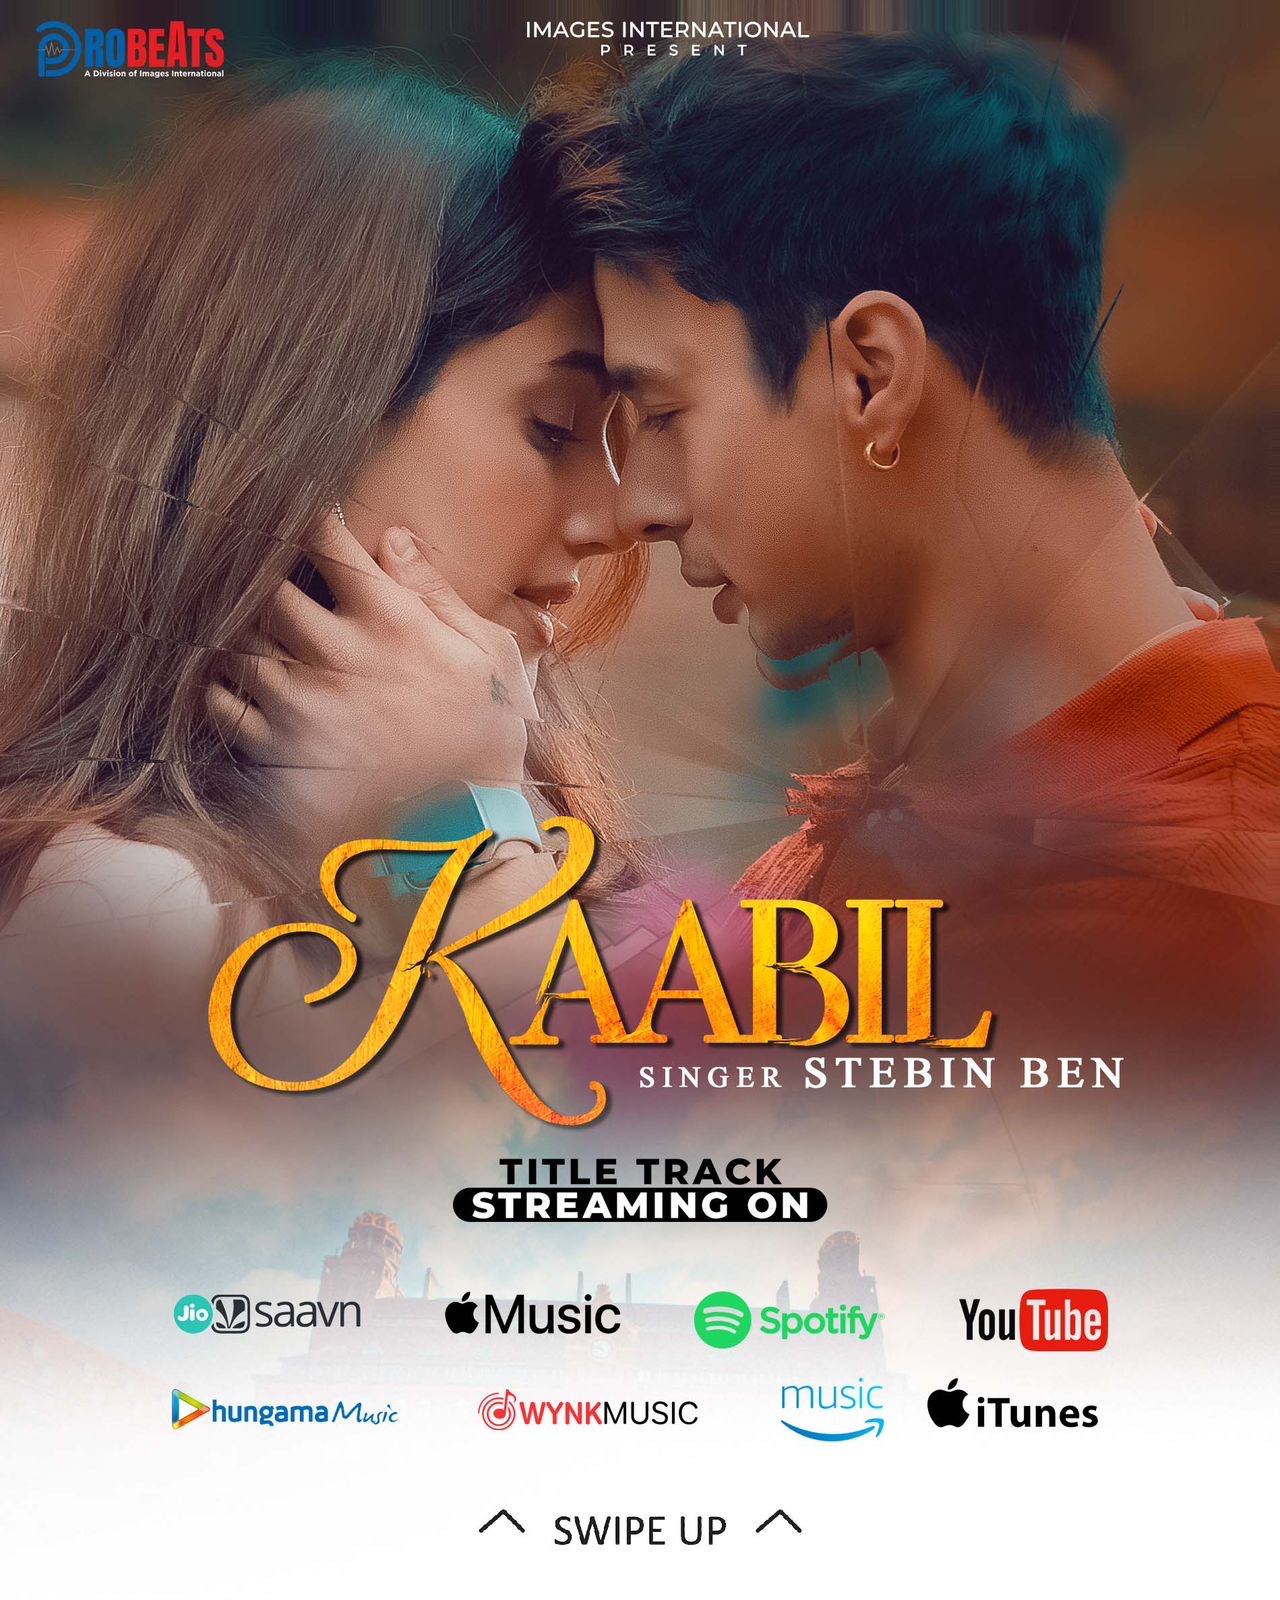 Pratik Sehajpal and Delbar Arya's Song 'Kaabil' by Probeats Hits 9 Million Views